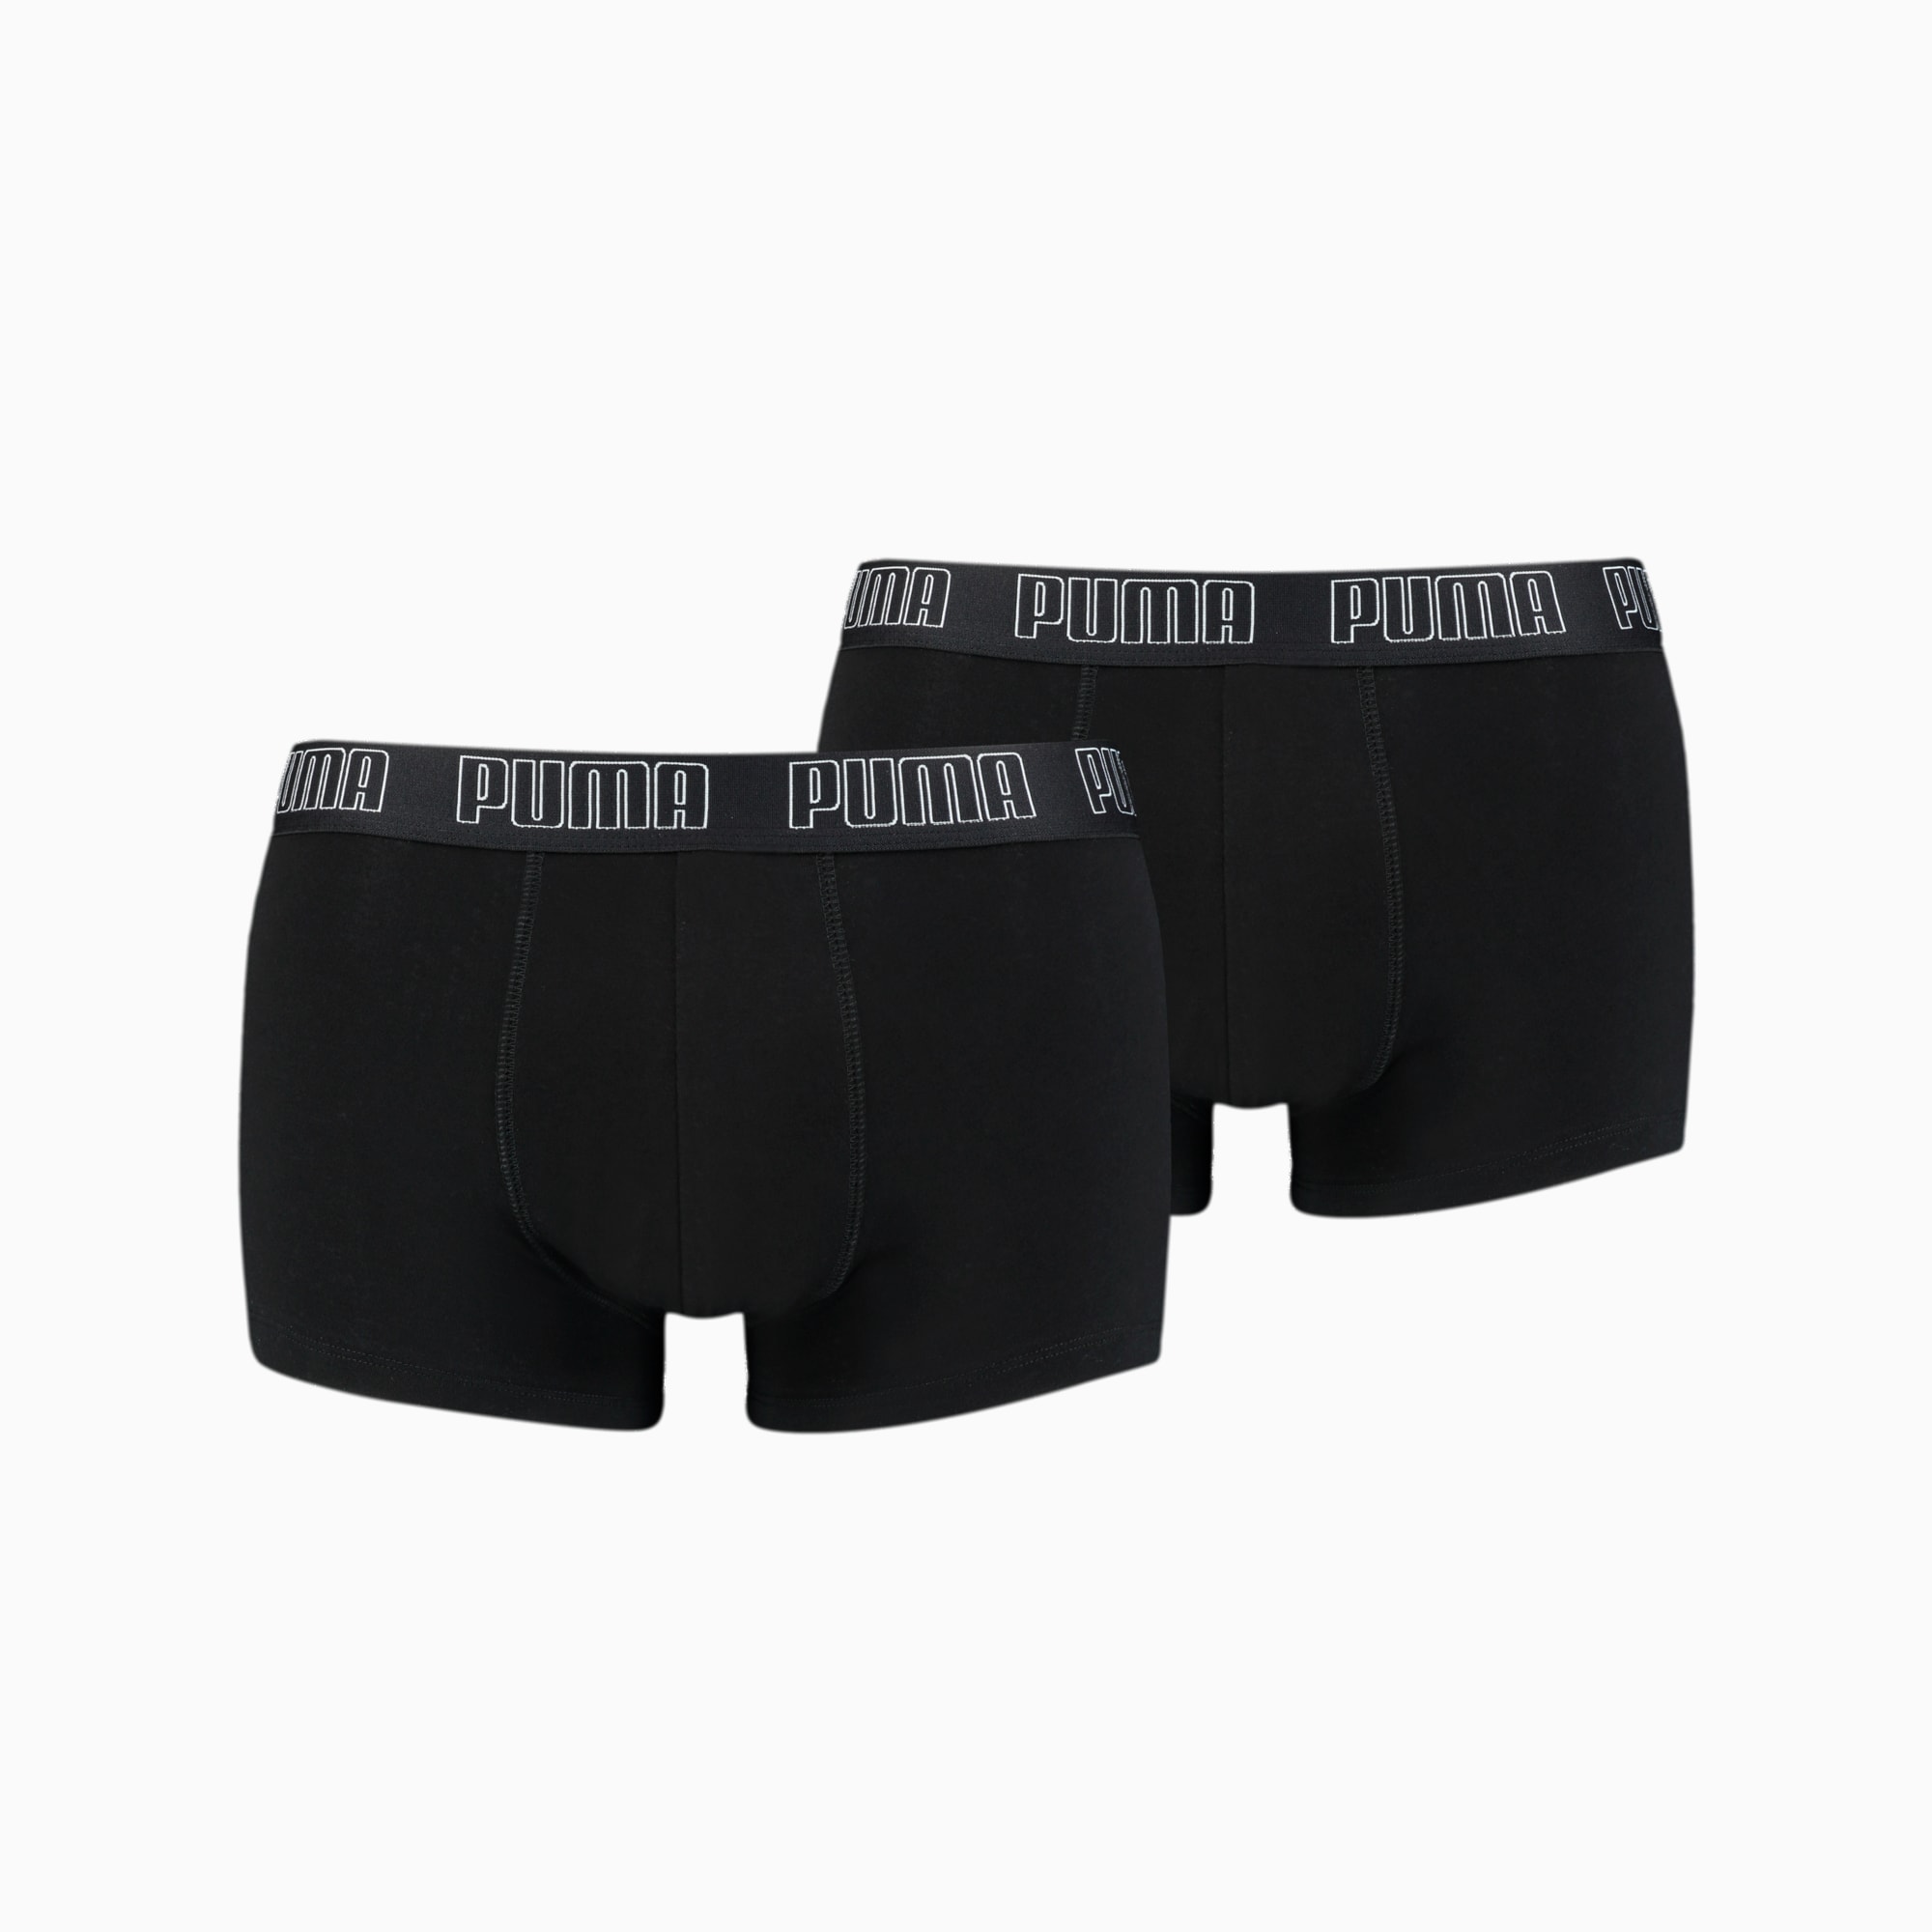 PUMA Basic Men's Trunks 2 Pack, Black, Size M, Clothing